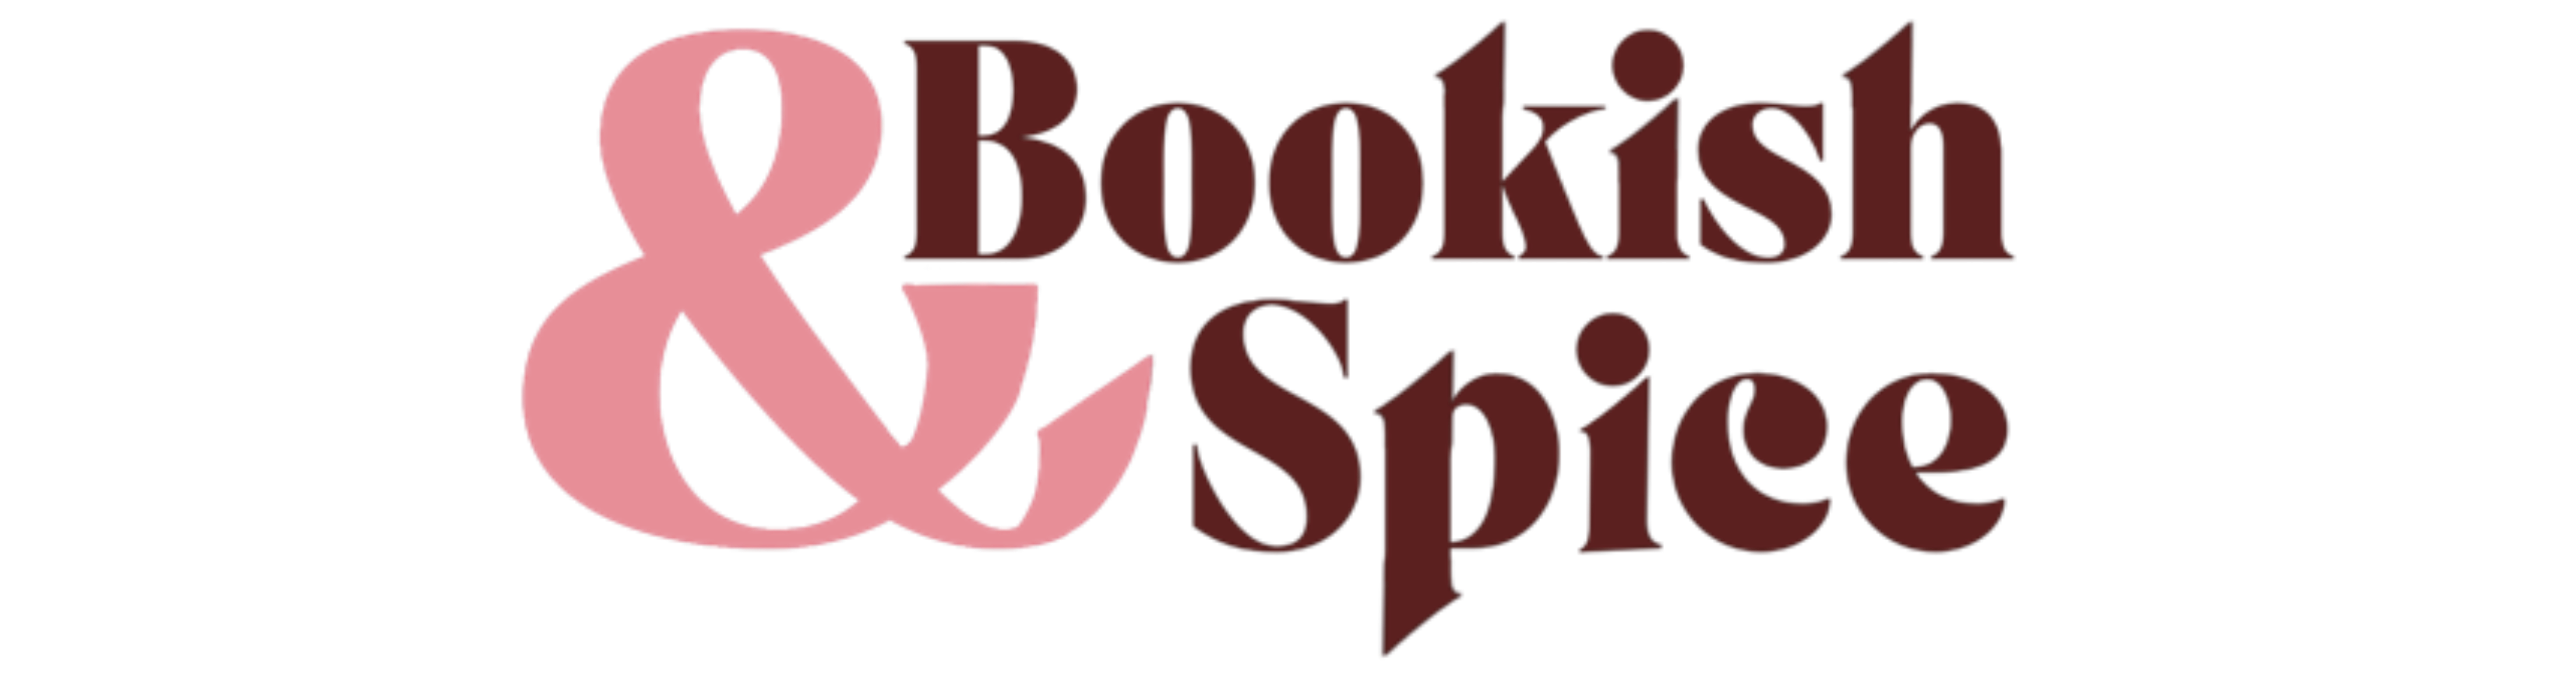 Bookish&Spice